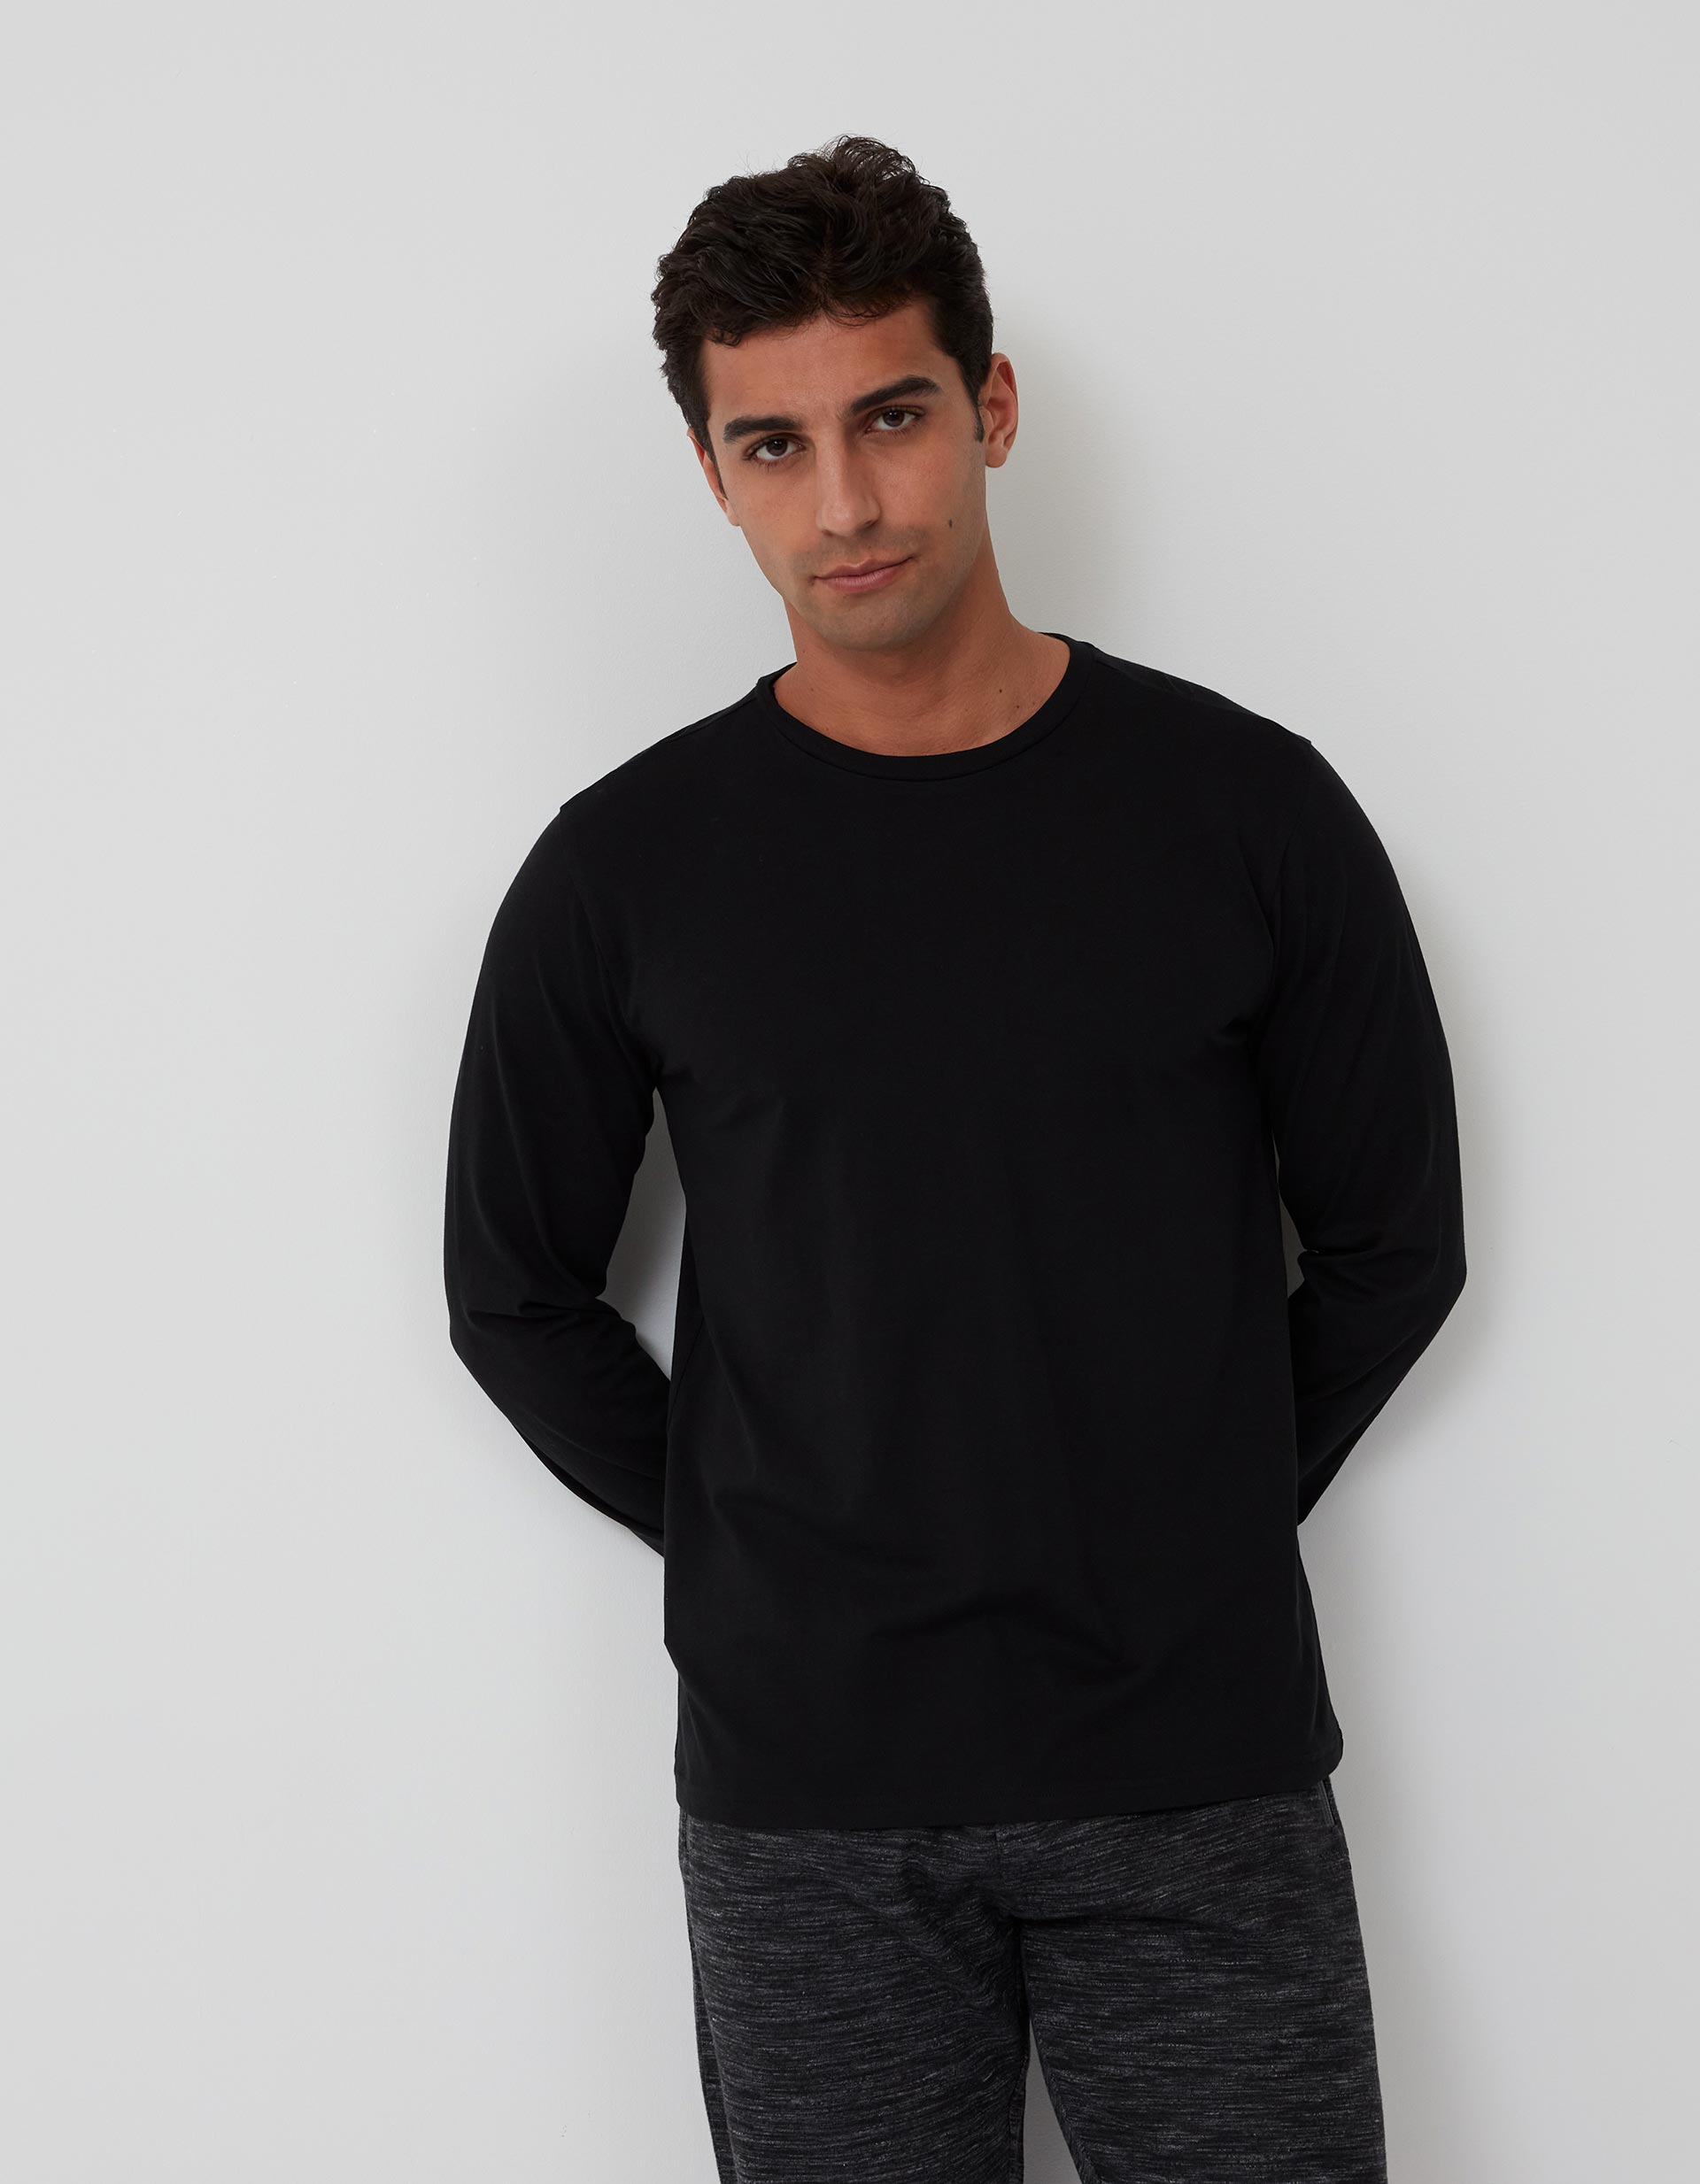 Basic Black Long-Sleeved T-shirt from MO Online